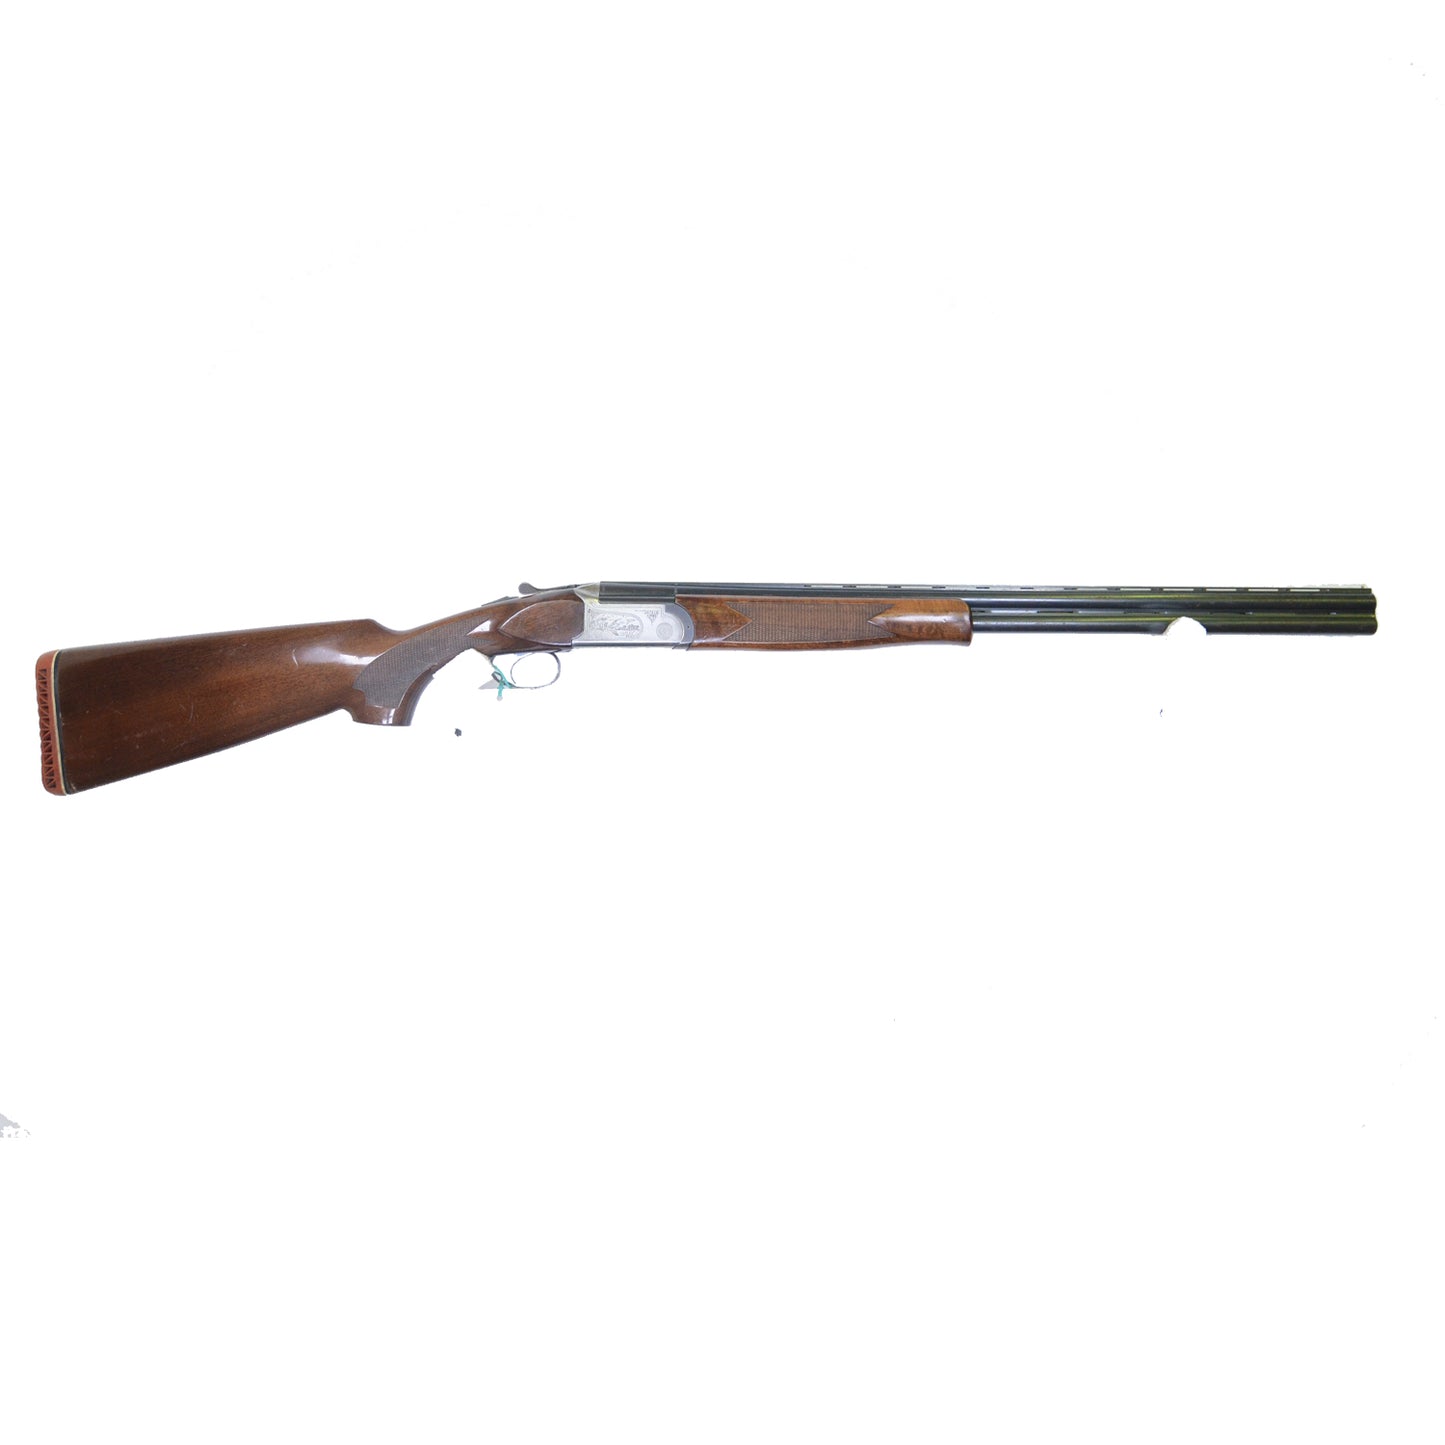 Lumar 20g Shotgun - 5113